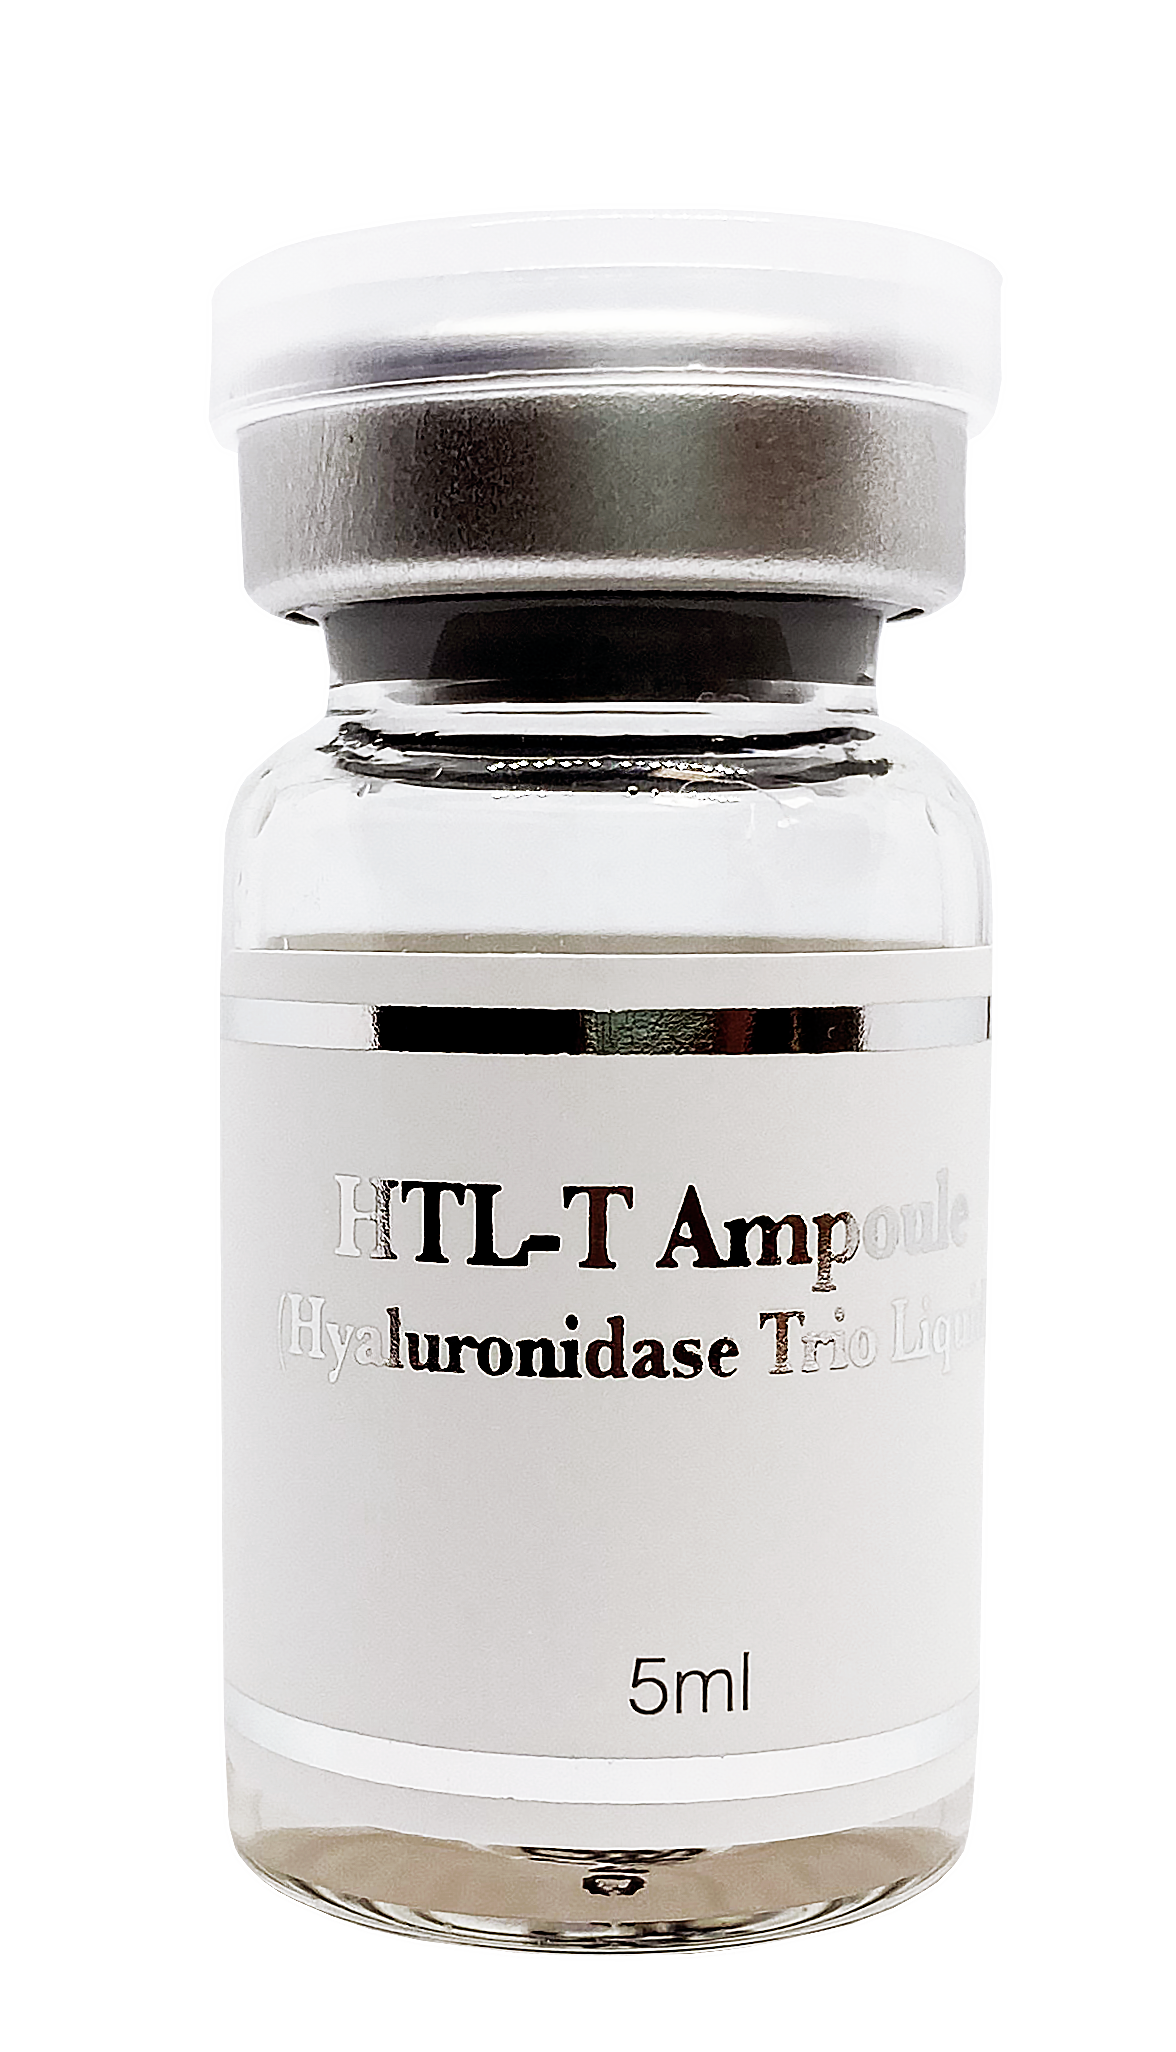 картинка HTL-T Ampoule (Hyaluronidase Trio Liquid Ampoule) - Элдермафилл инъекционный препарат (5 мл)